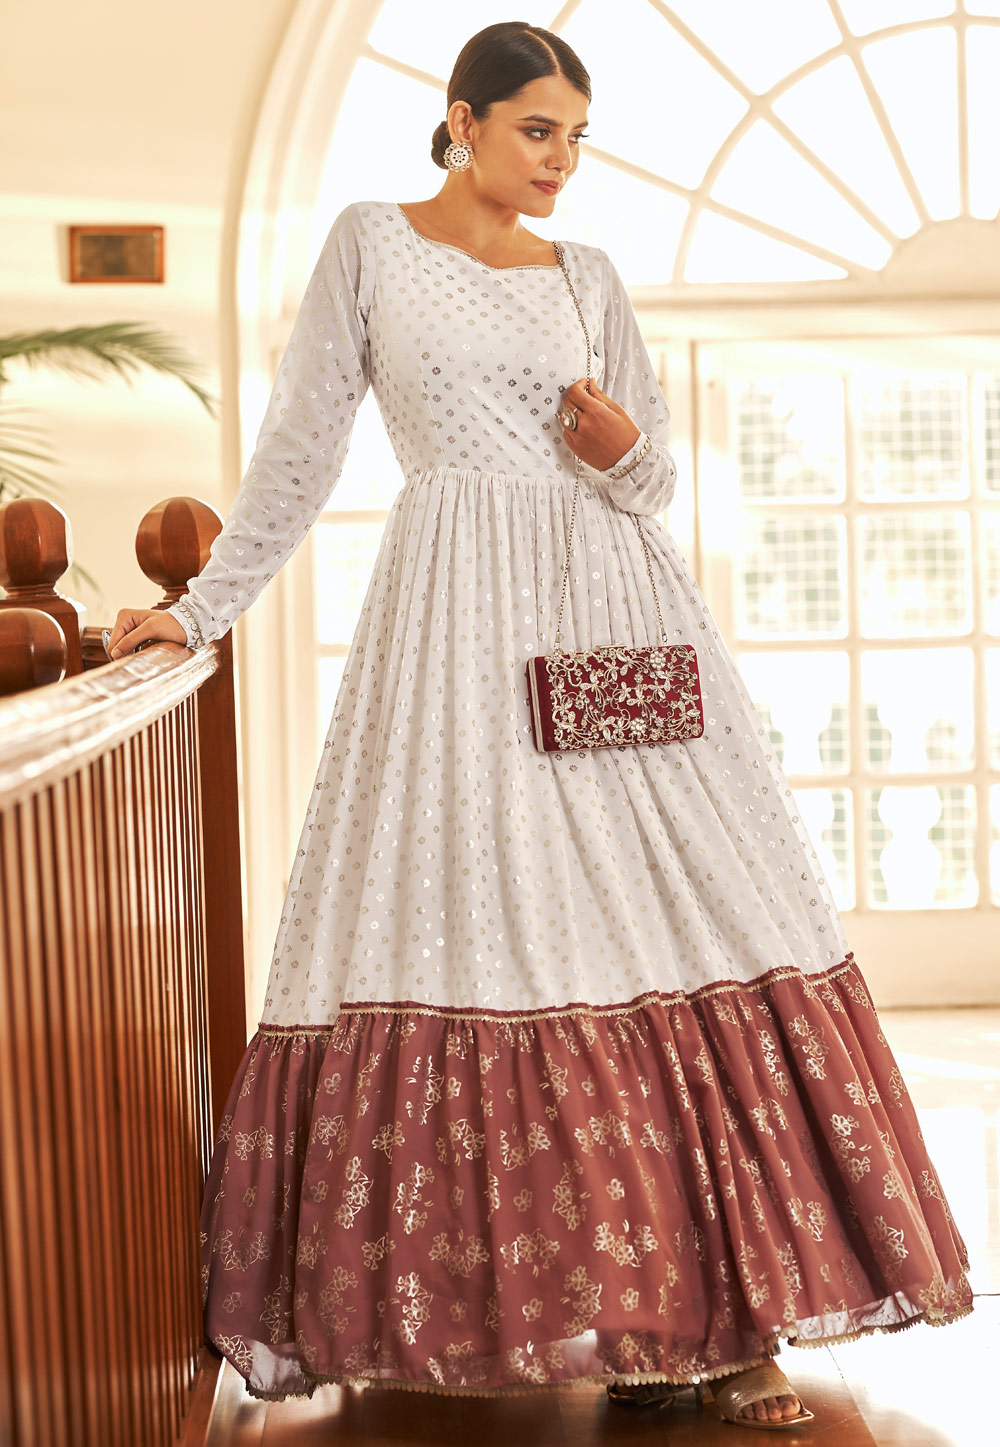 Buy Cutiepie Stylish Kids Girl Frocks Dress Western wear traditional wear  dresses for kids girls - Lowest price in India| GlowRoad